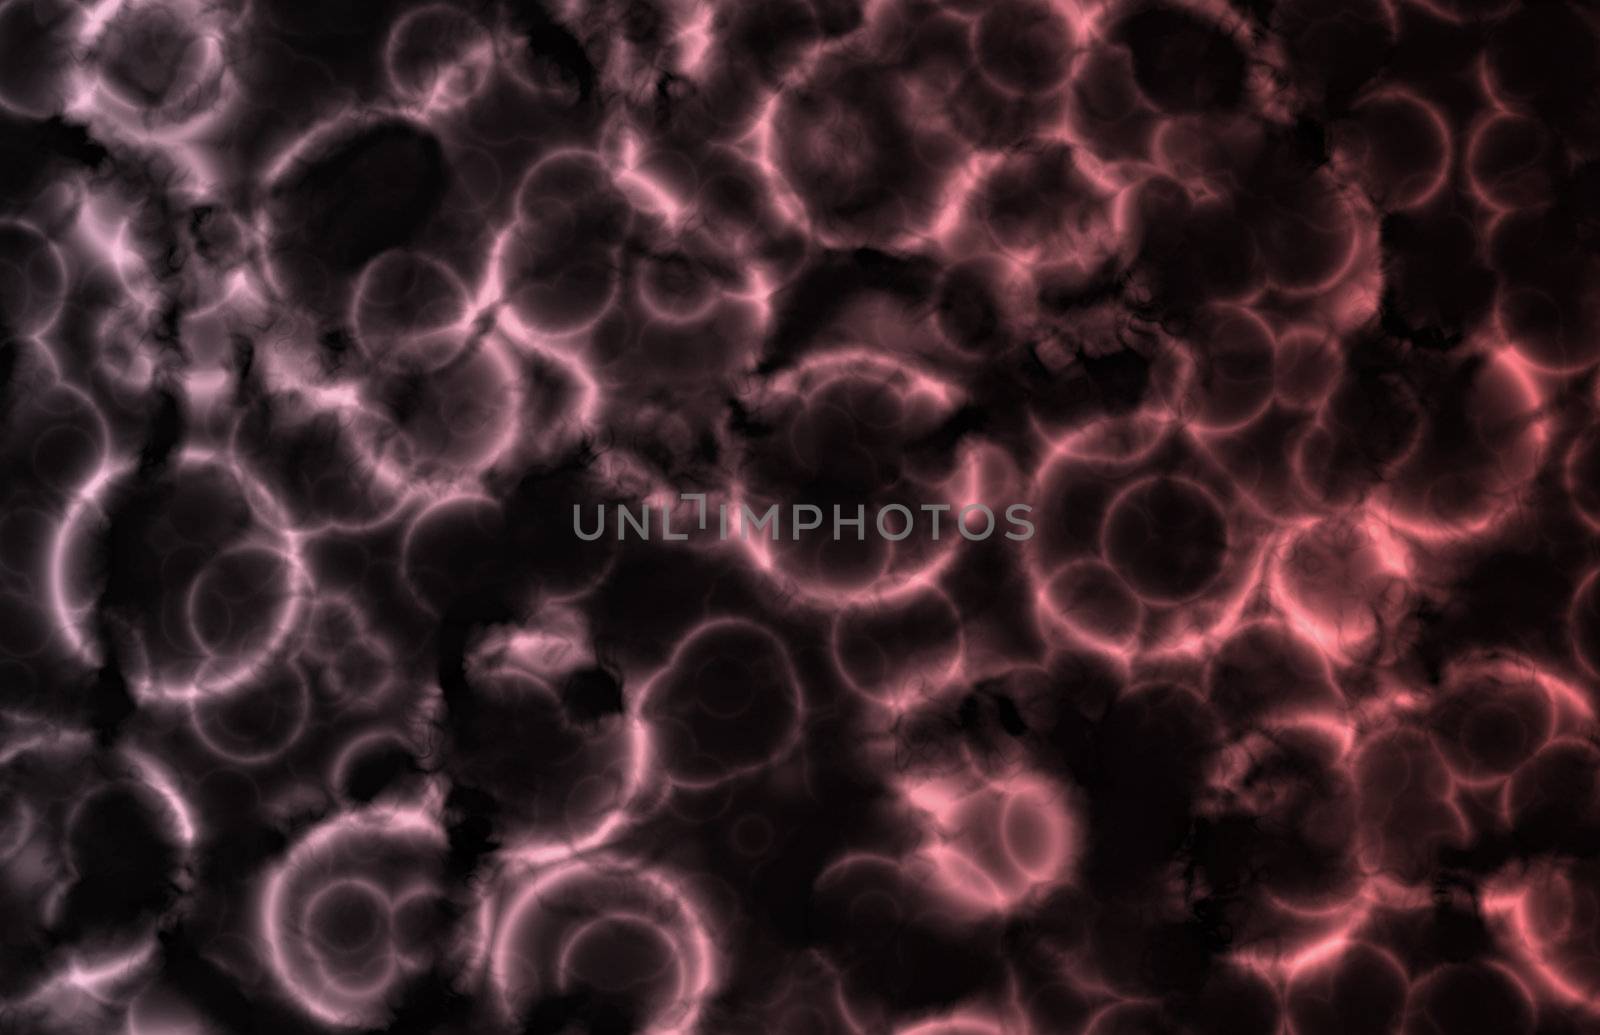 Microscopic Cell Organisms as an Abstract Art